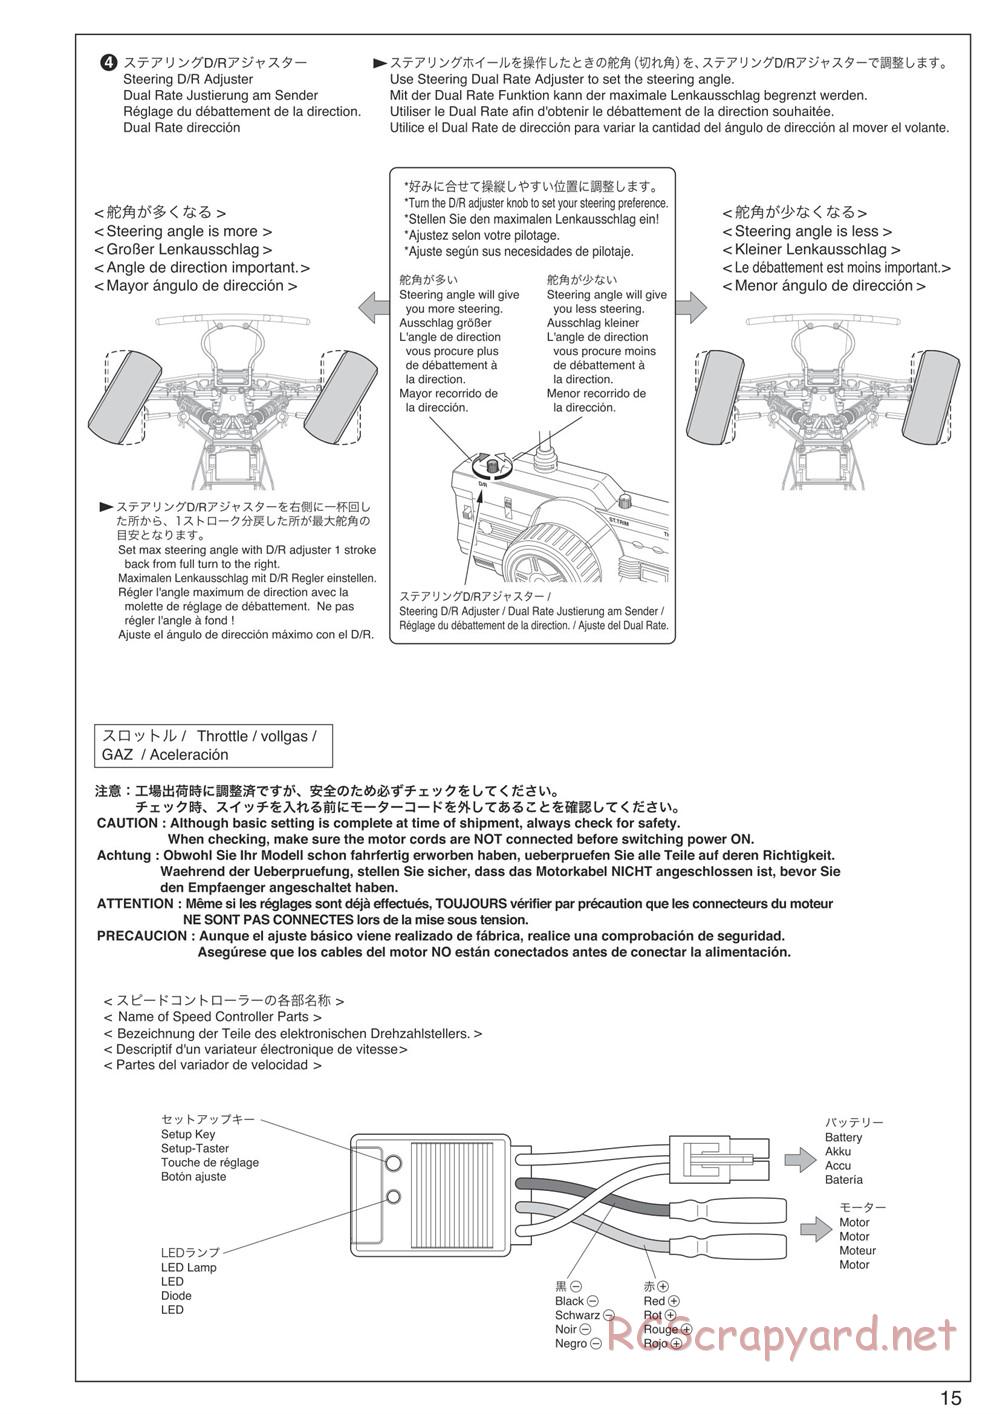 Kyosho - Ultima-SC - Manual - Page 15